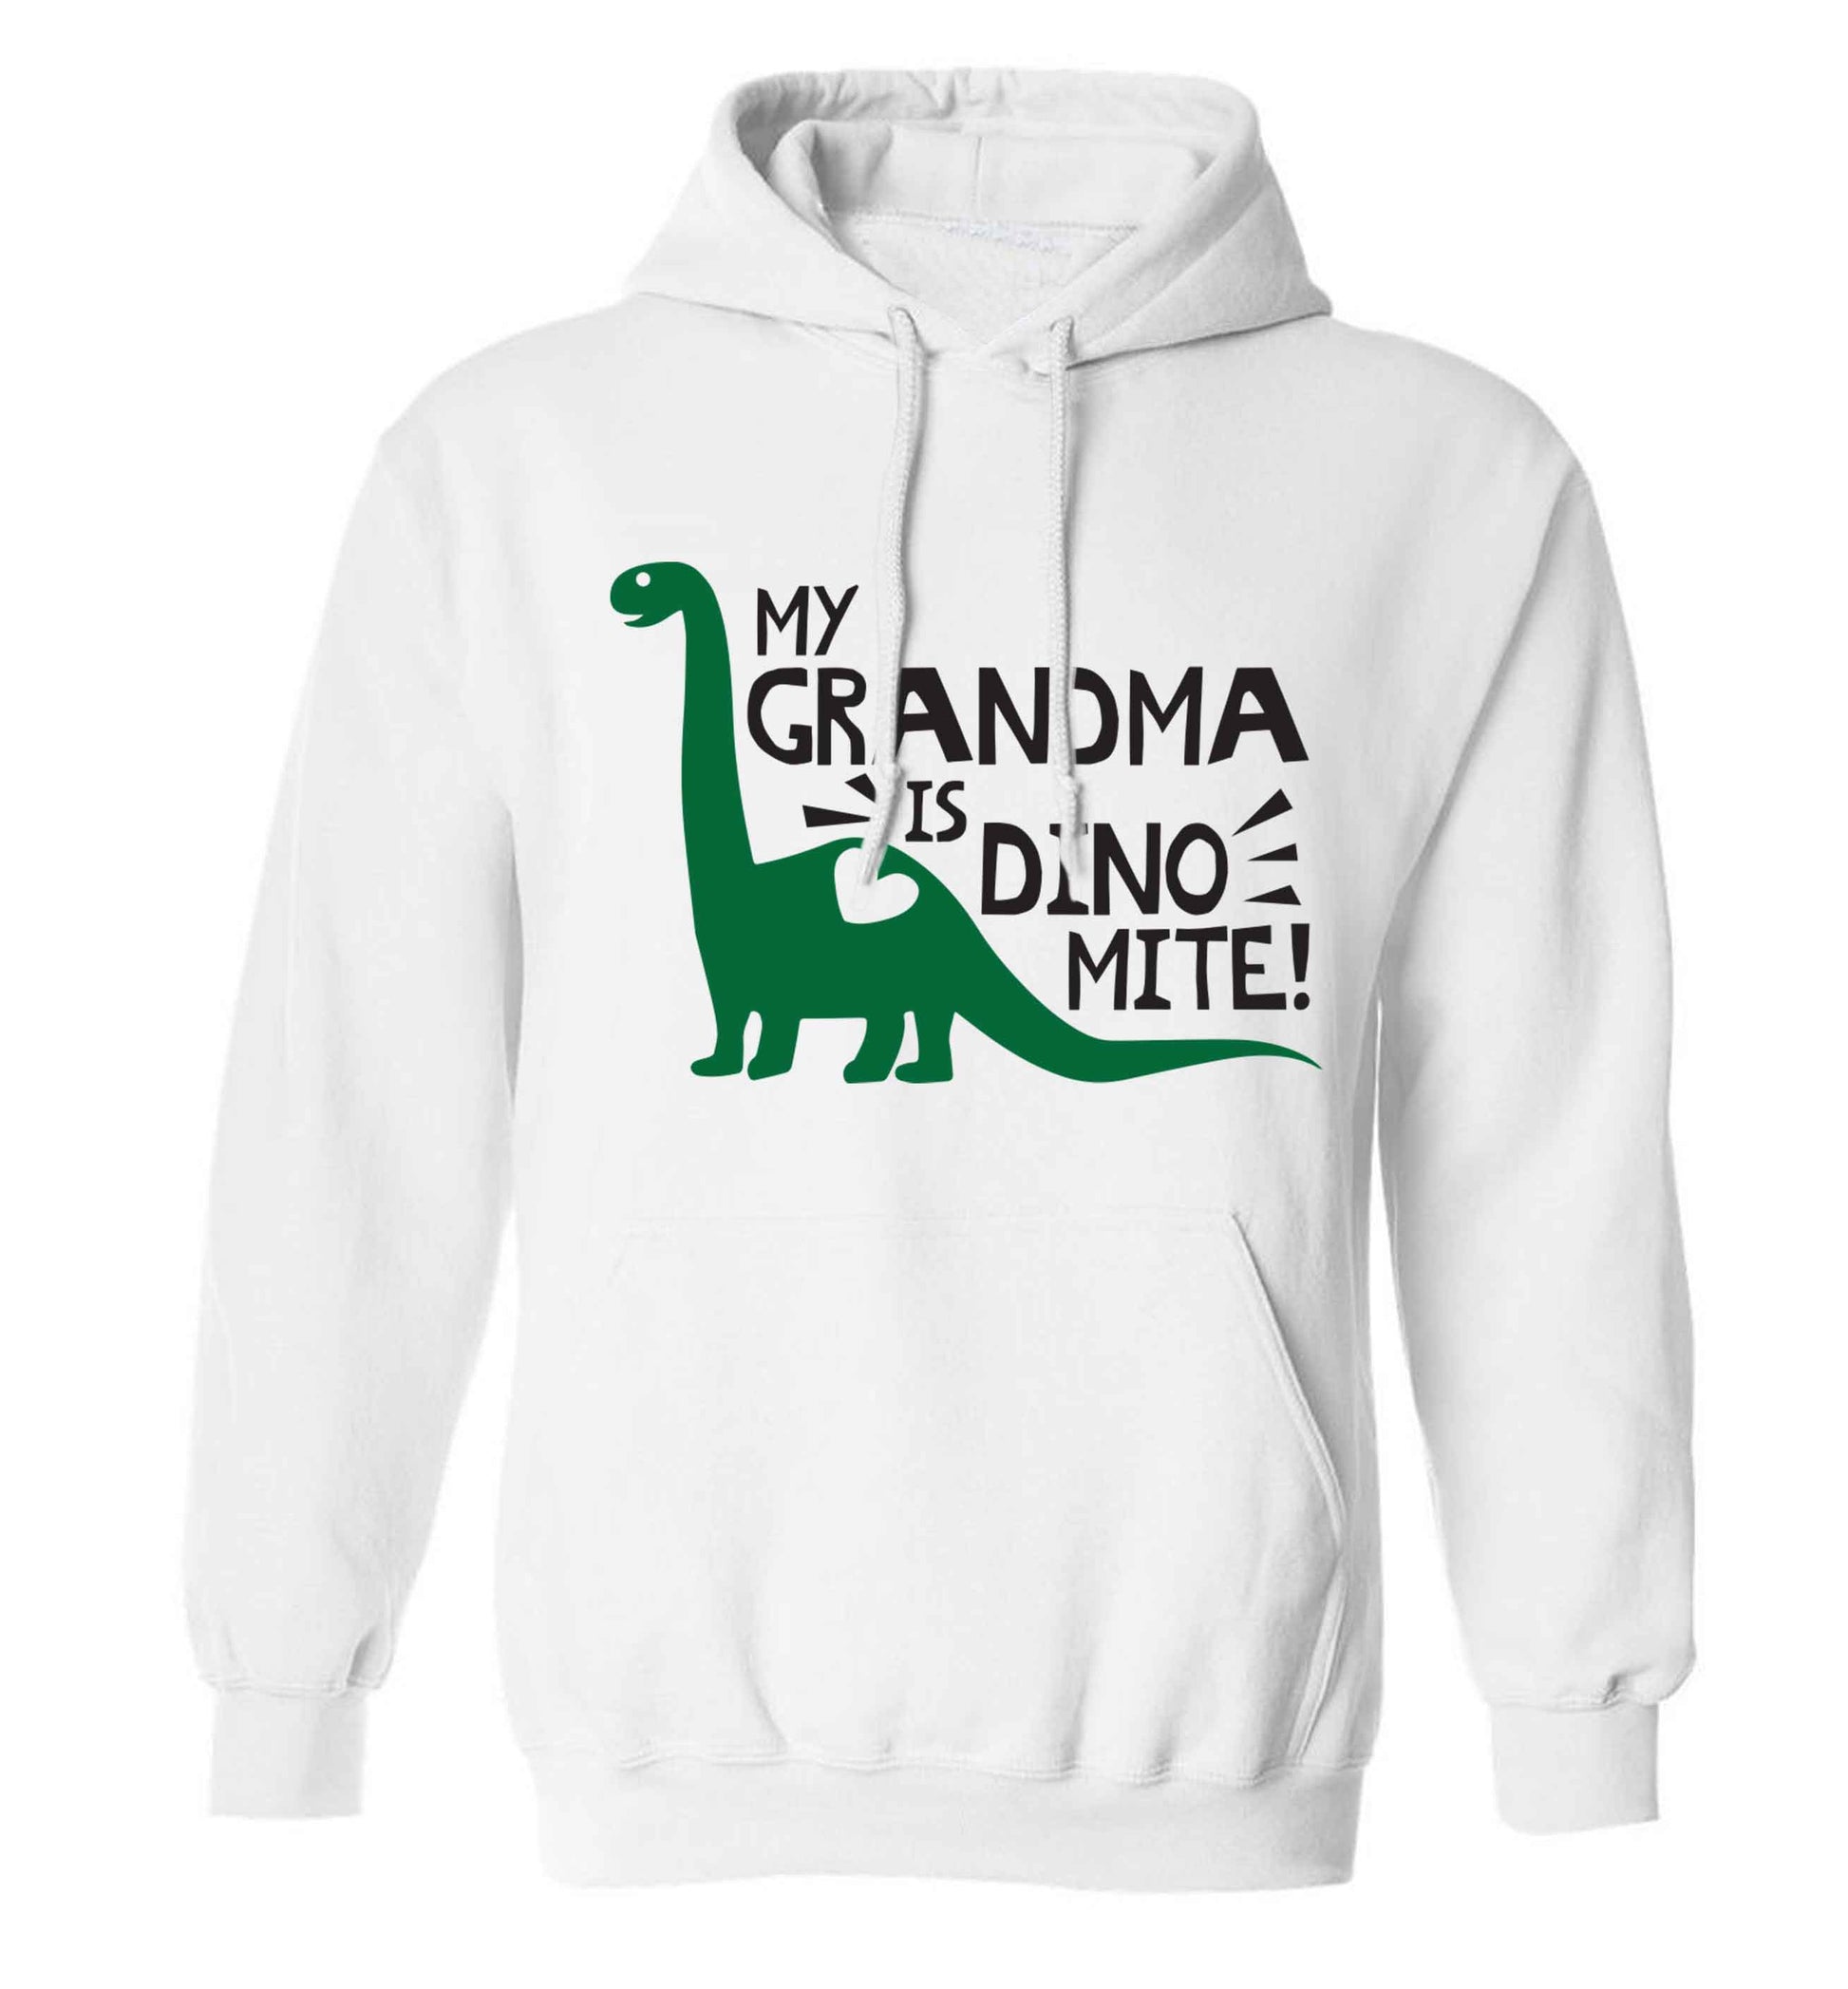 My grandma is dinomite! adults unisex white hoodie 2XL